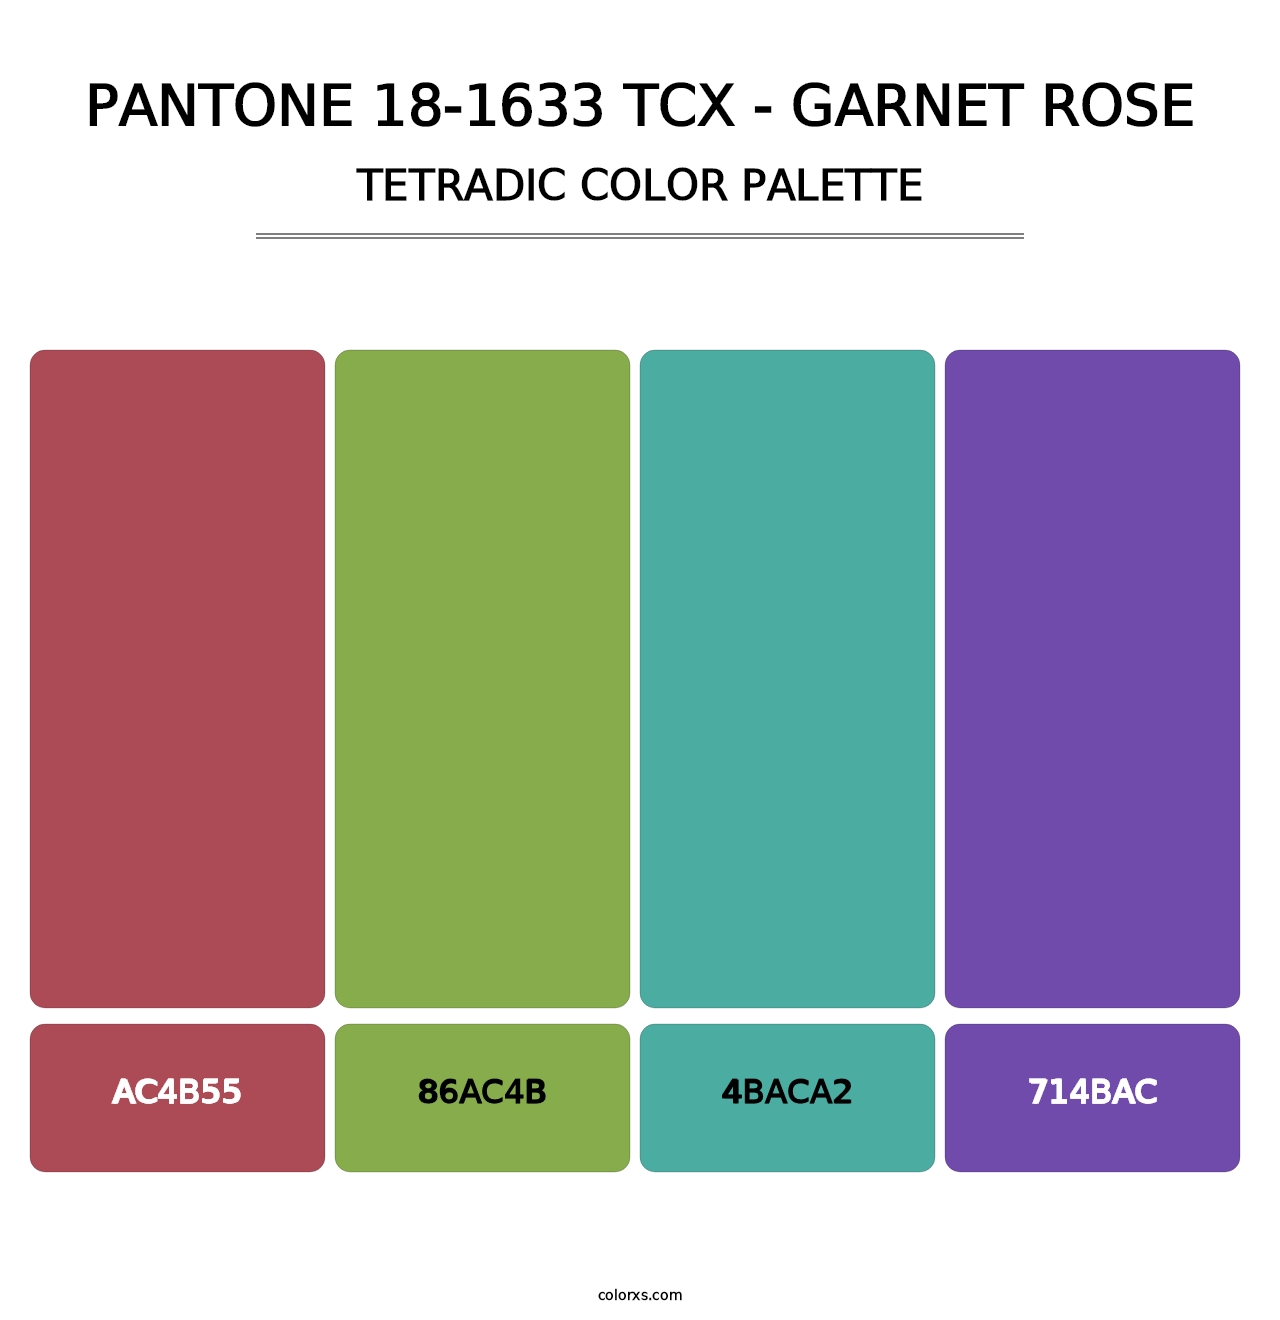 PANTONE 18-1633 TCX - Garnet Rose - Tetradic Color Palette